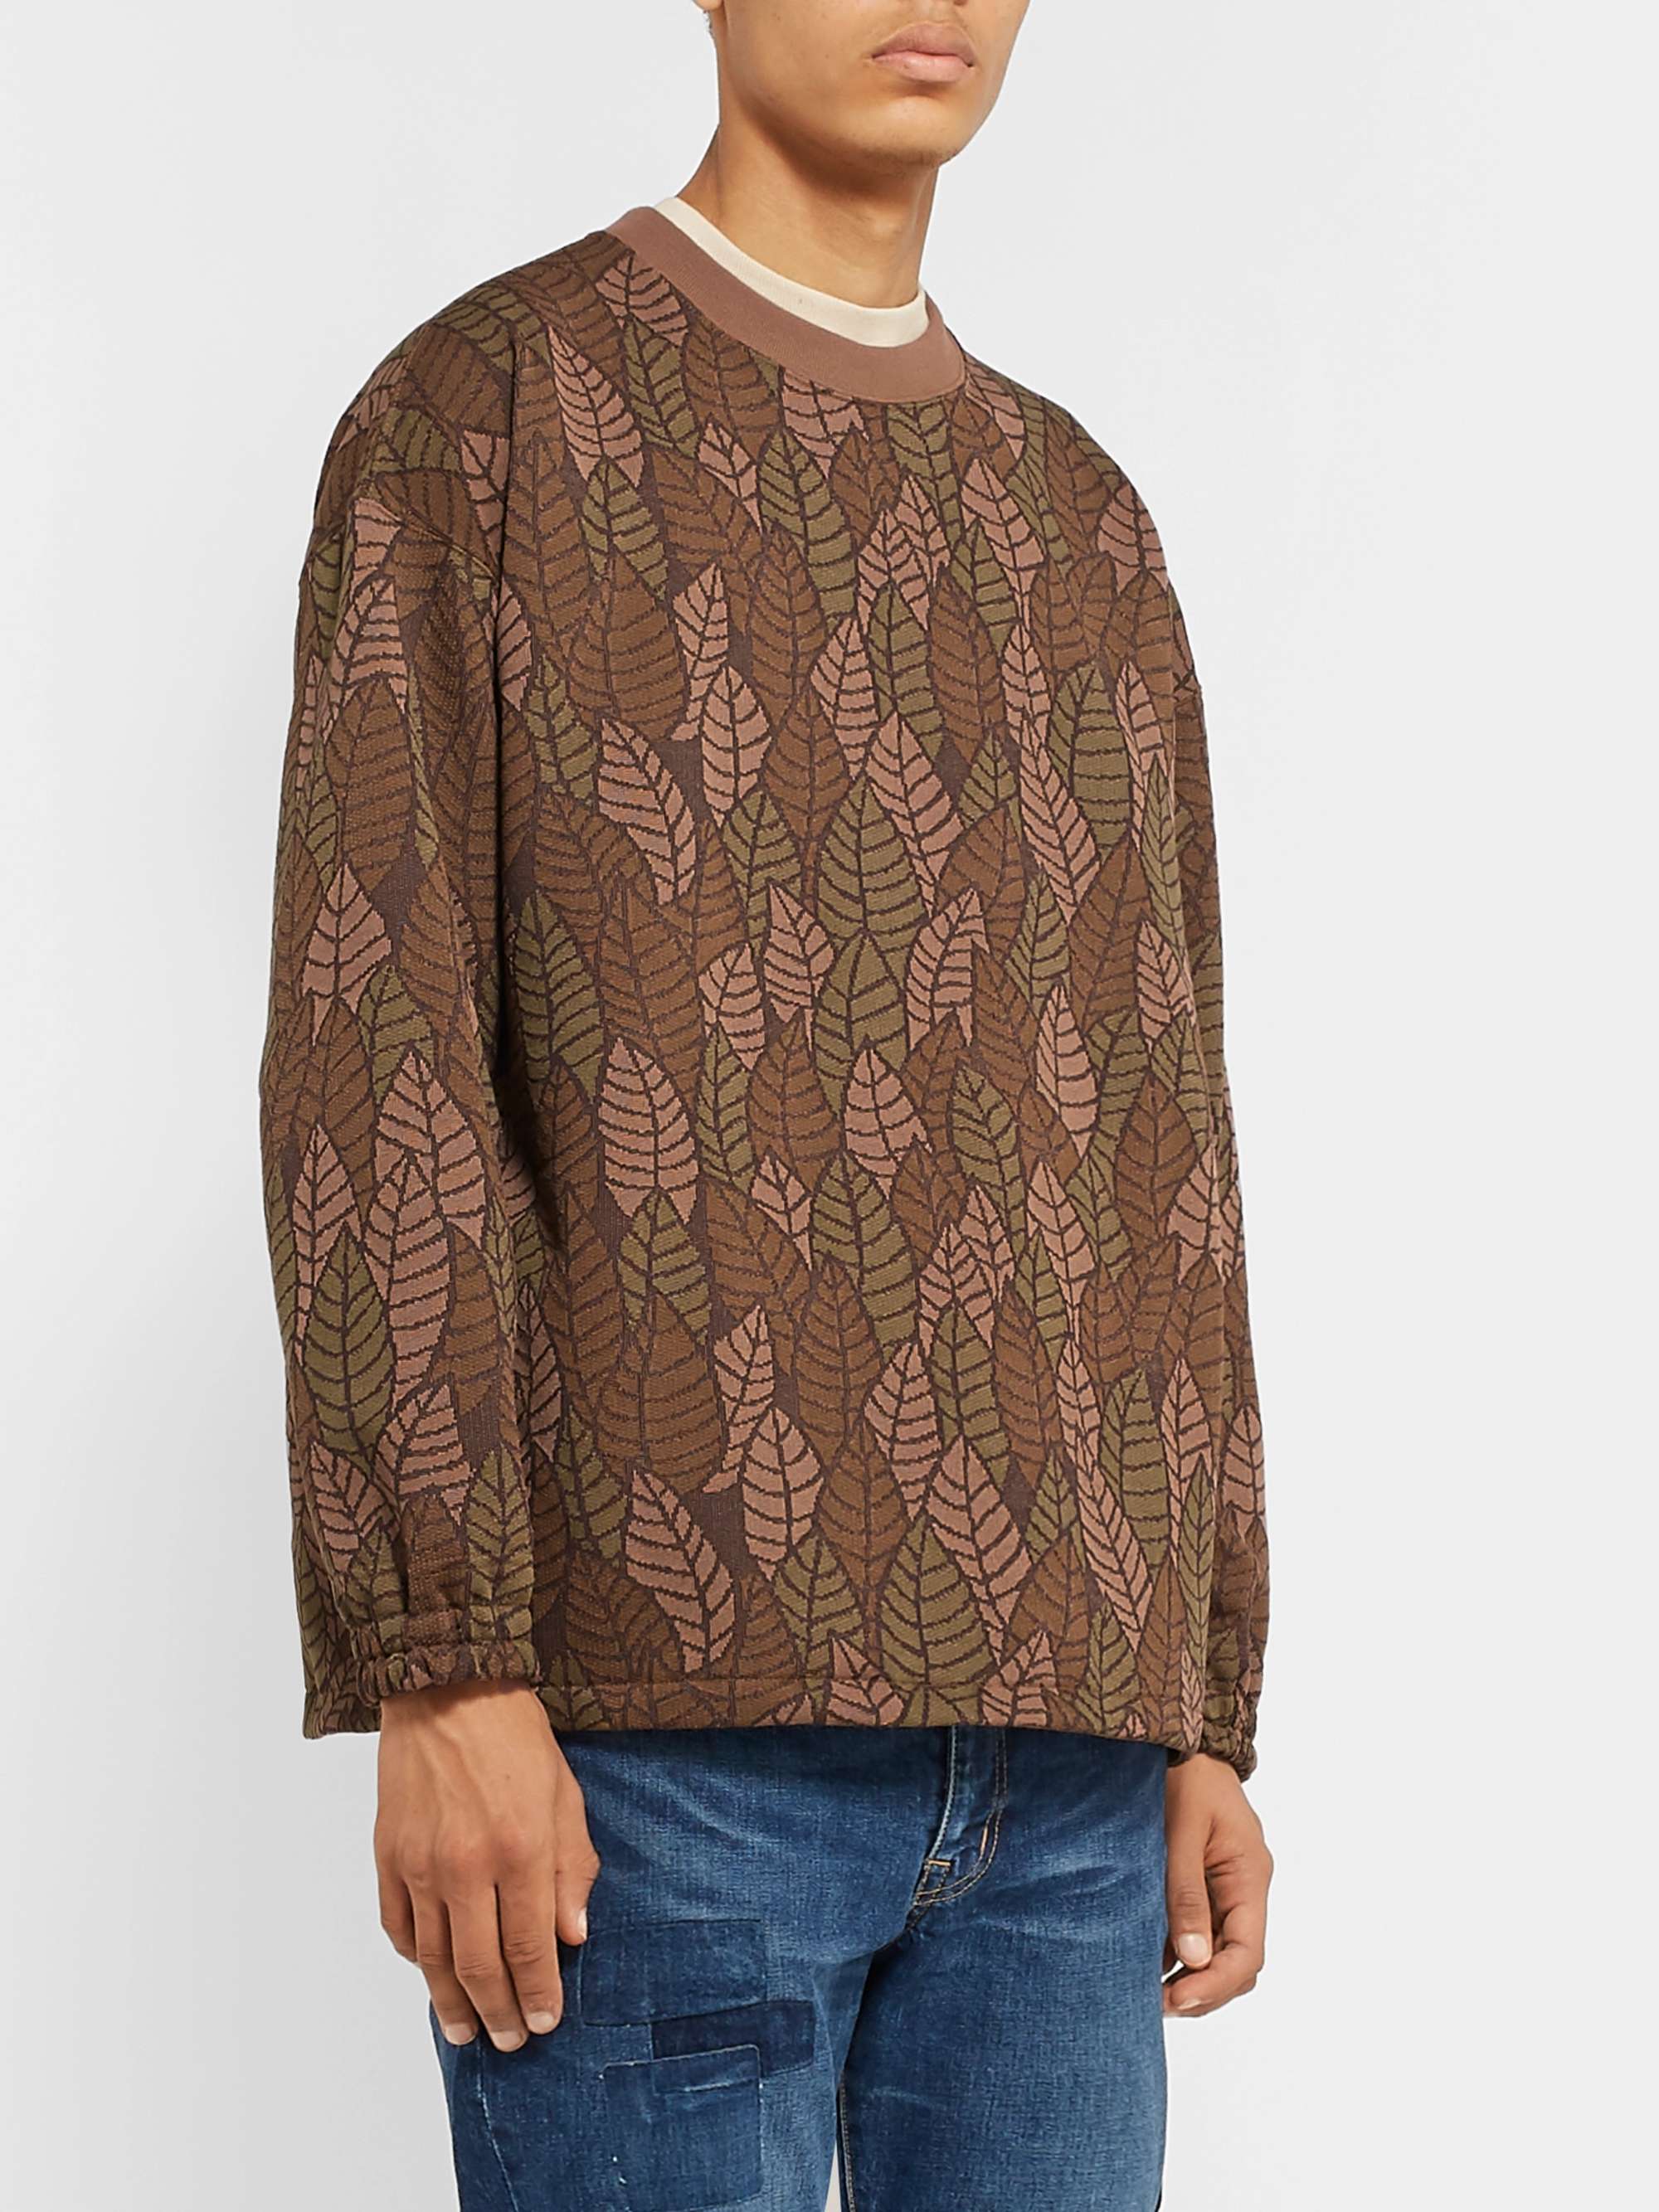 REMI RELIEF Jacquard-Knit Sweatshirt for Men | MR PORTER